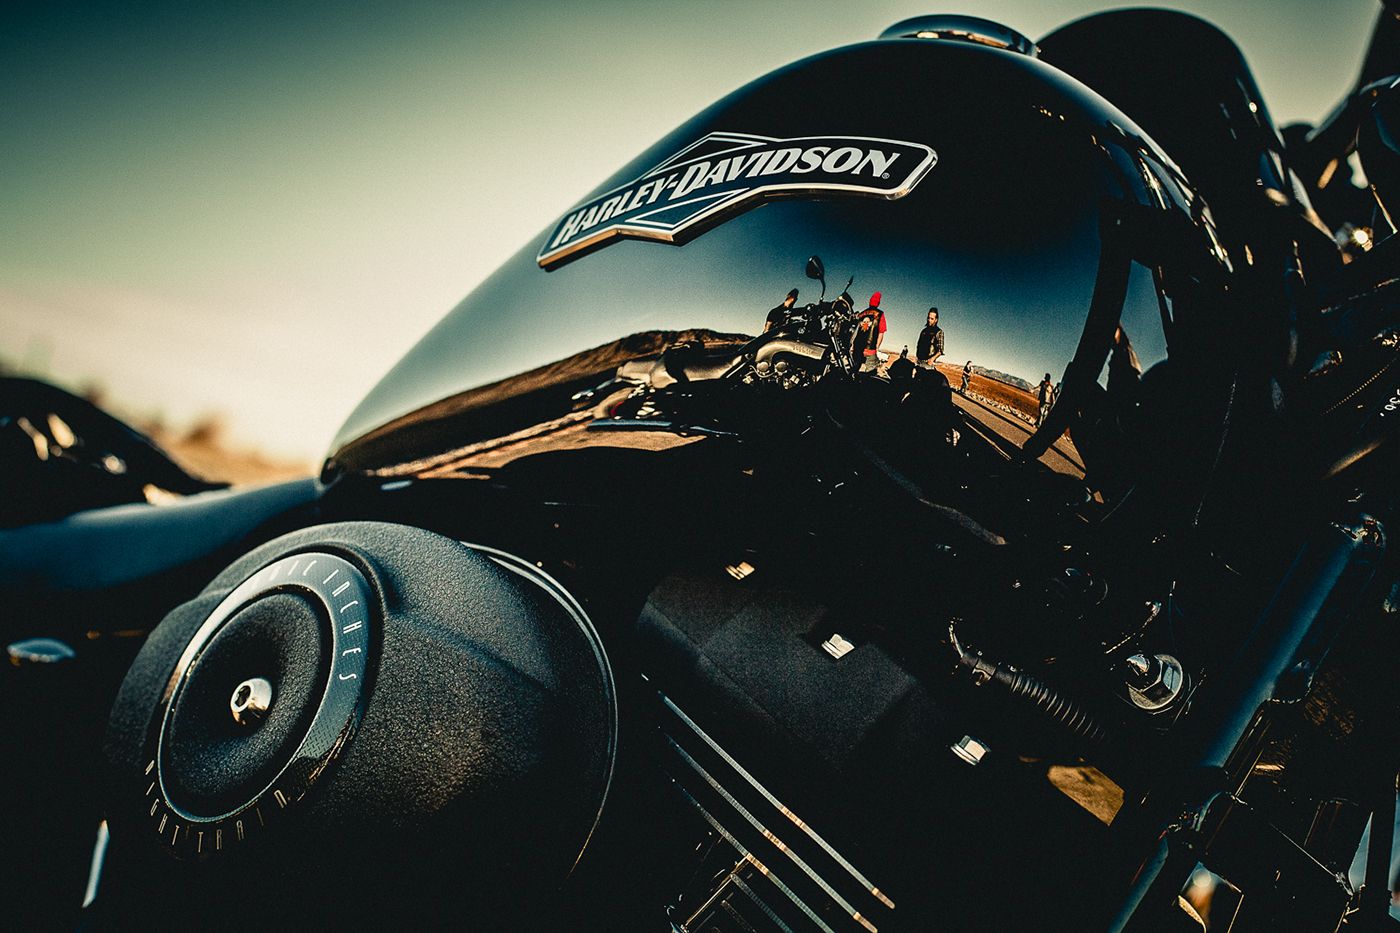 motorcycle Portraiture lifestyle photography